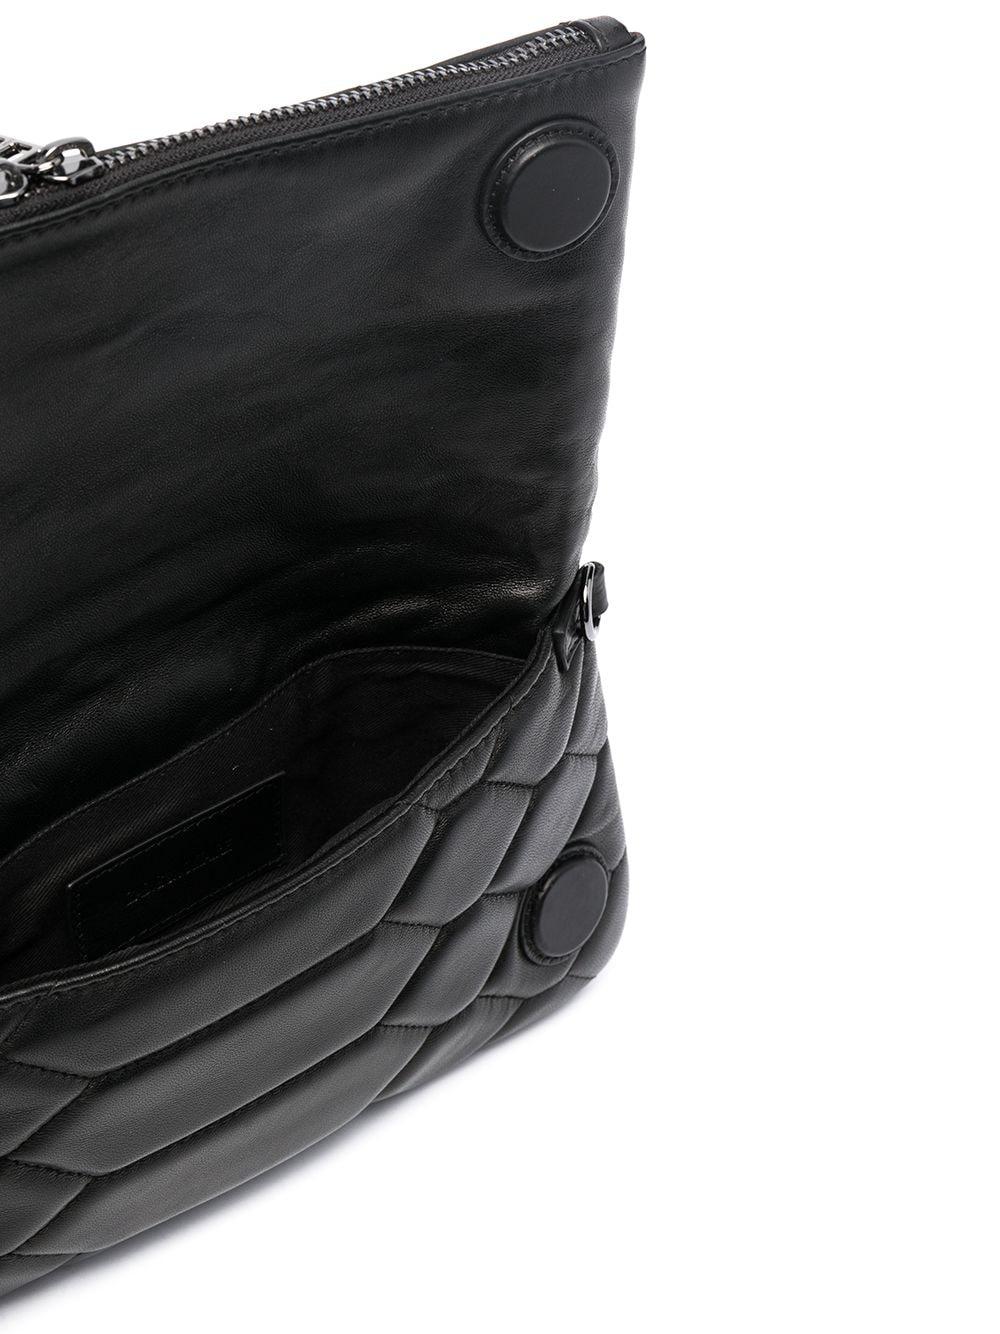 Zadig & Voltaire Rock Suede Double-Strap Clutch Shoulder Bag